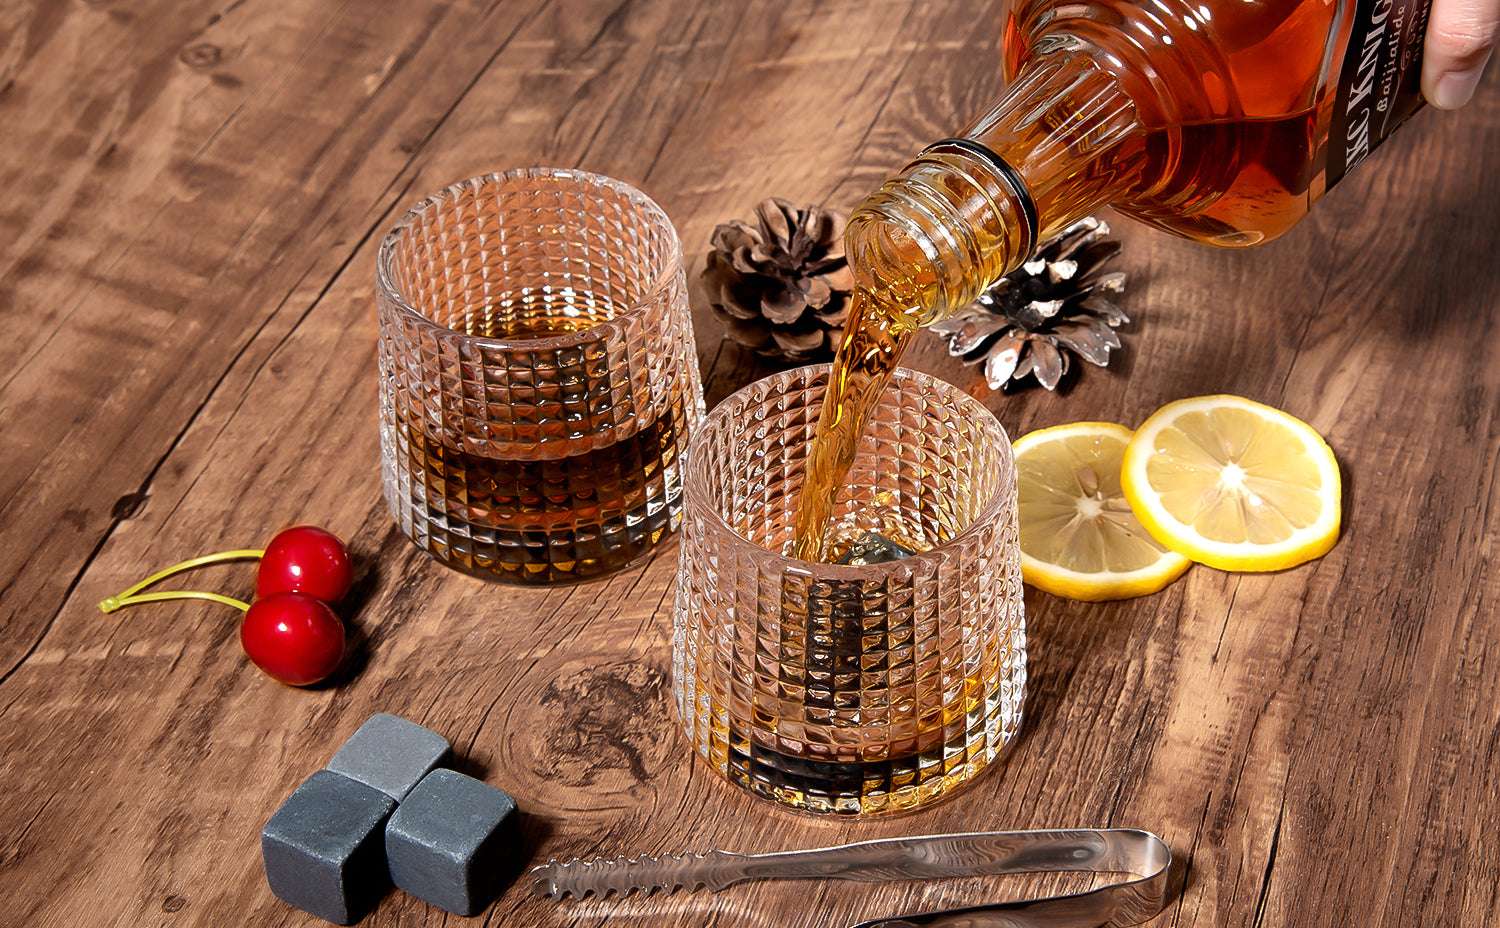 Elegant Crystal Whiskey Glass & Stones Set - Gifting By Julia M